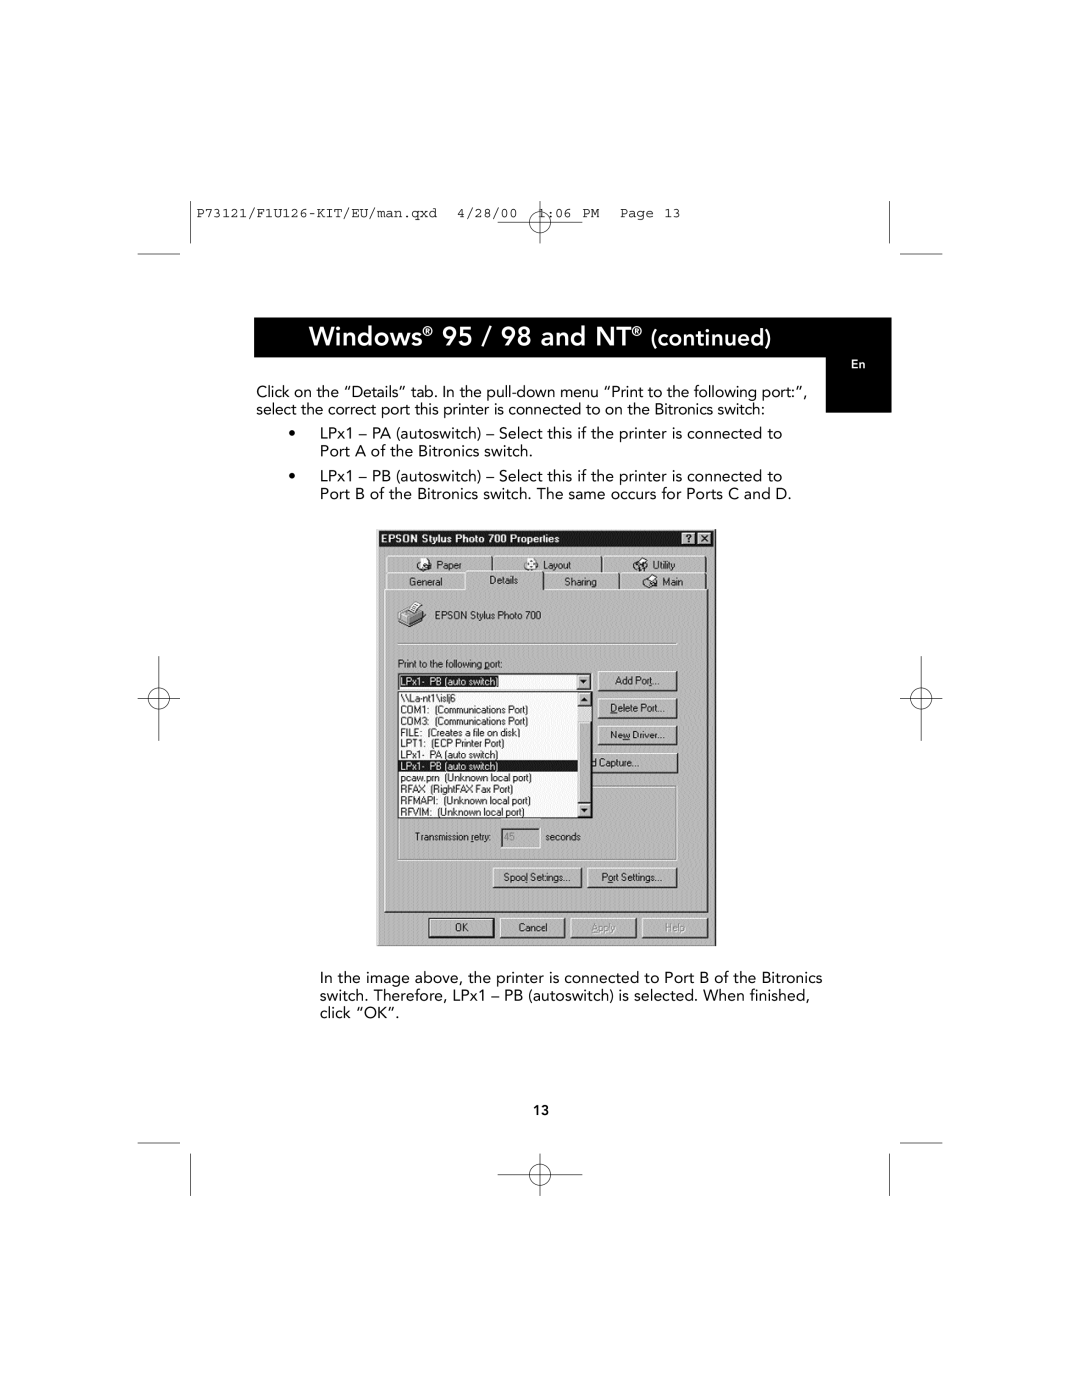 Belkin F1U126-KIT, P73121 user manual Windows 95 / 98 and NT continued 